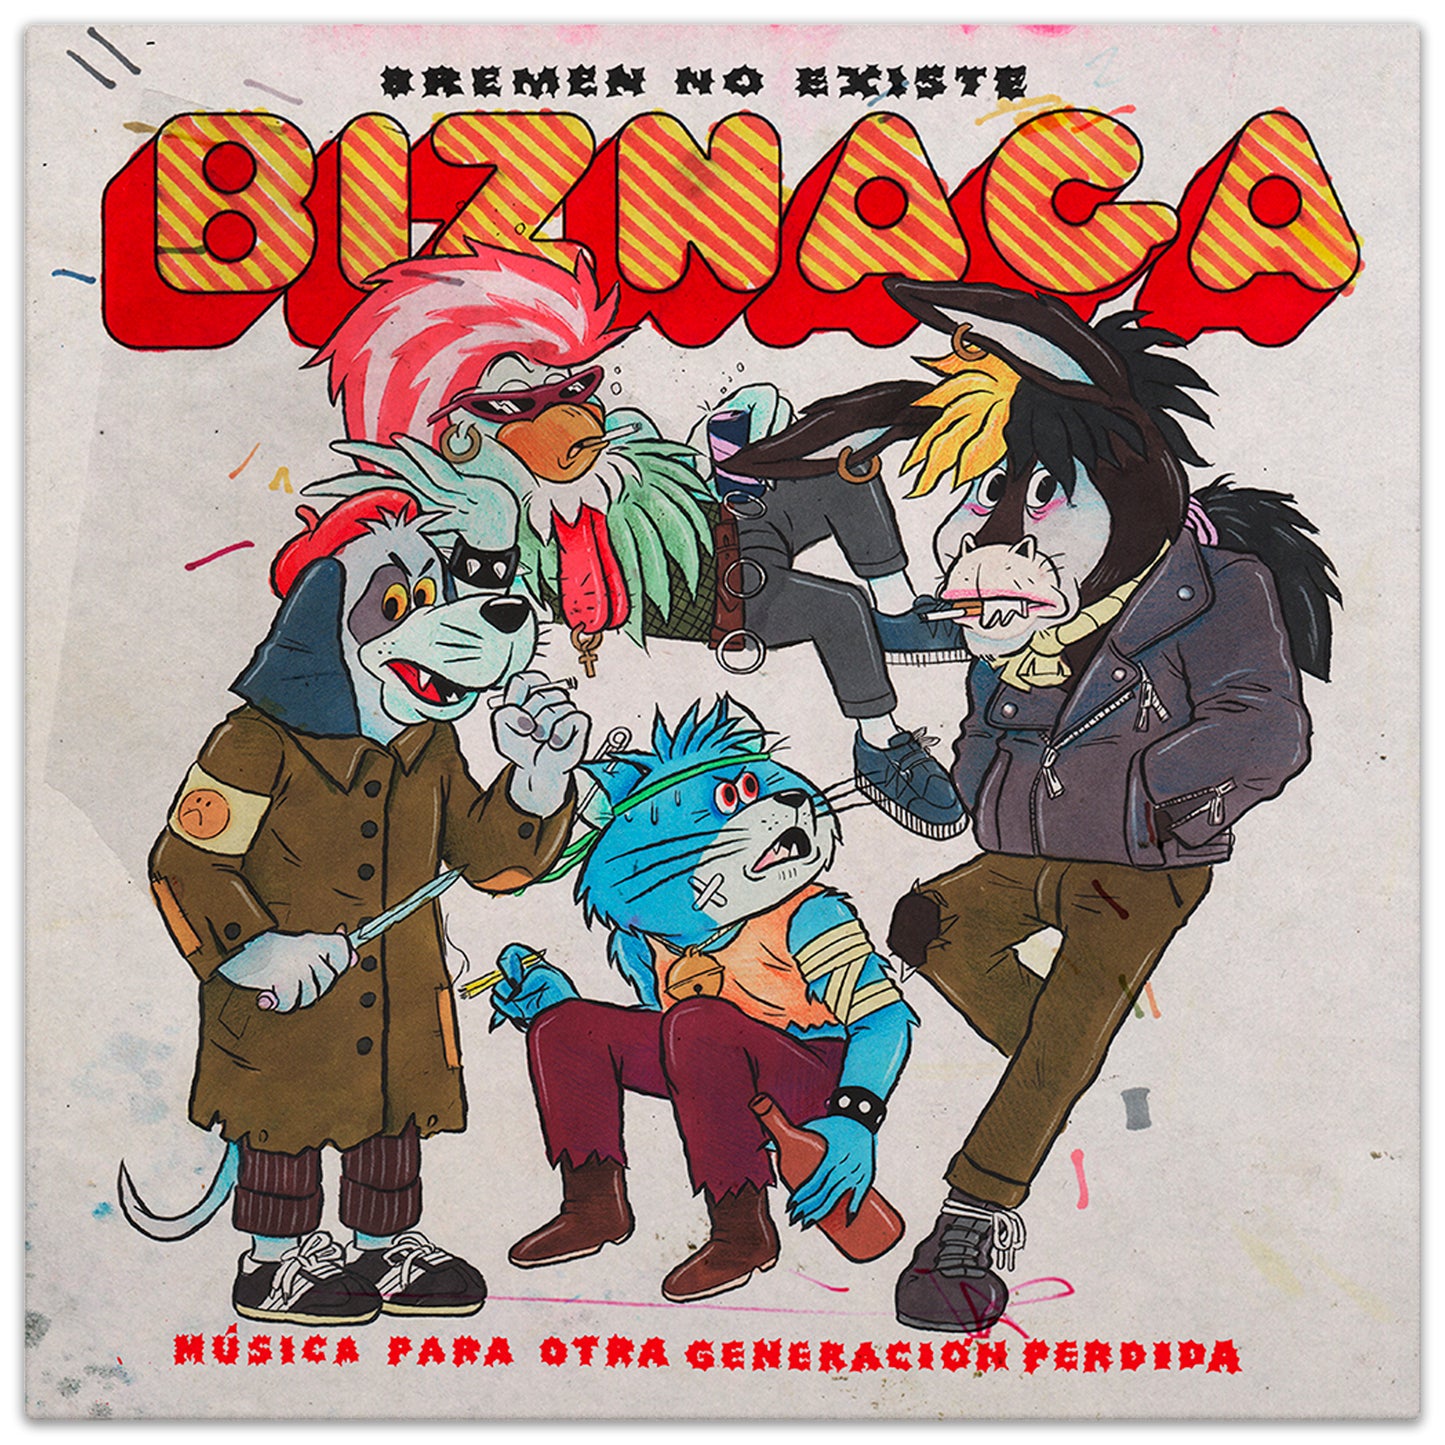 Biznaga - Bremen No Existe (12")